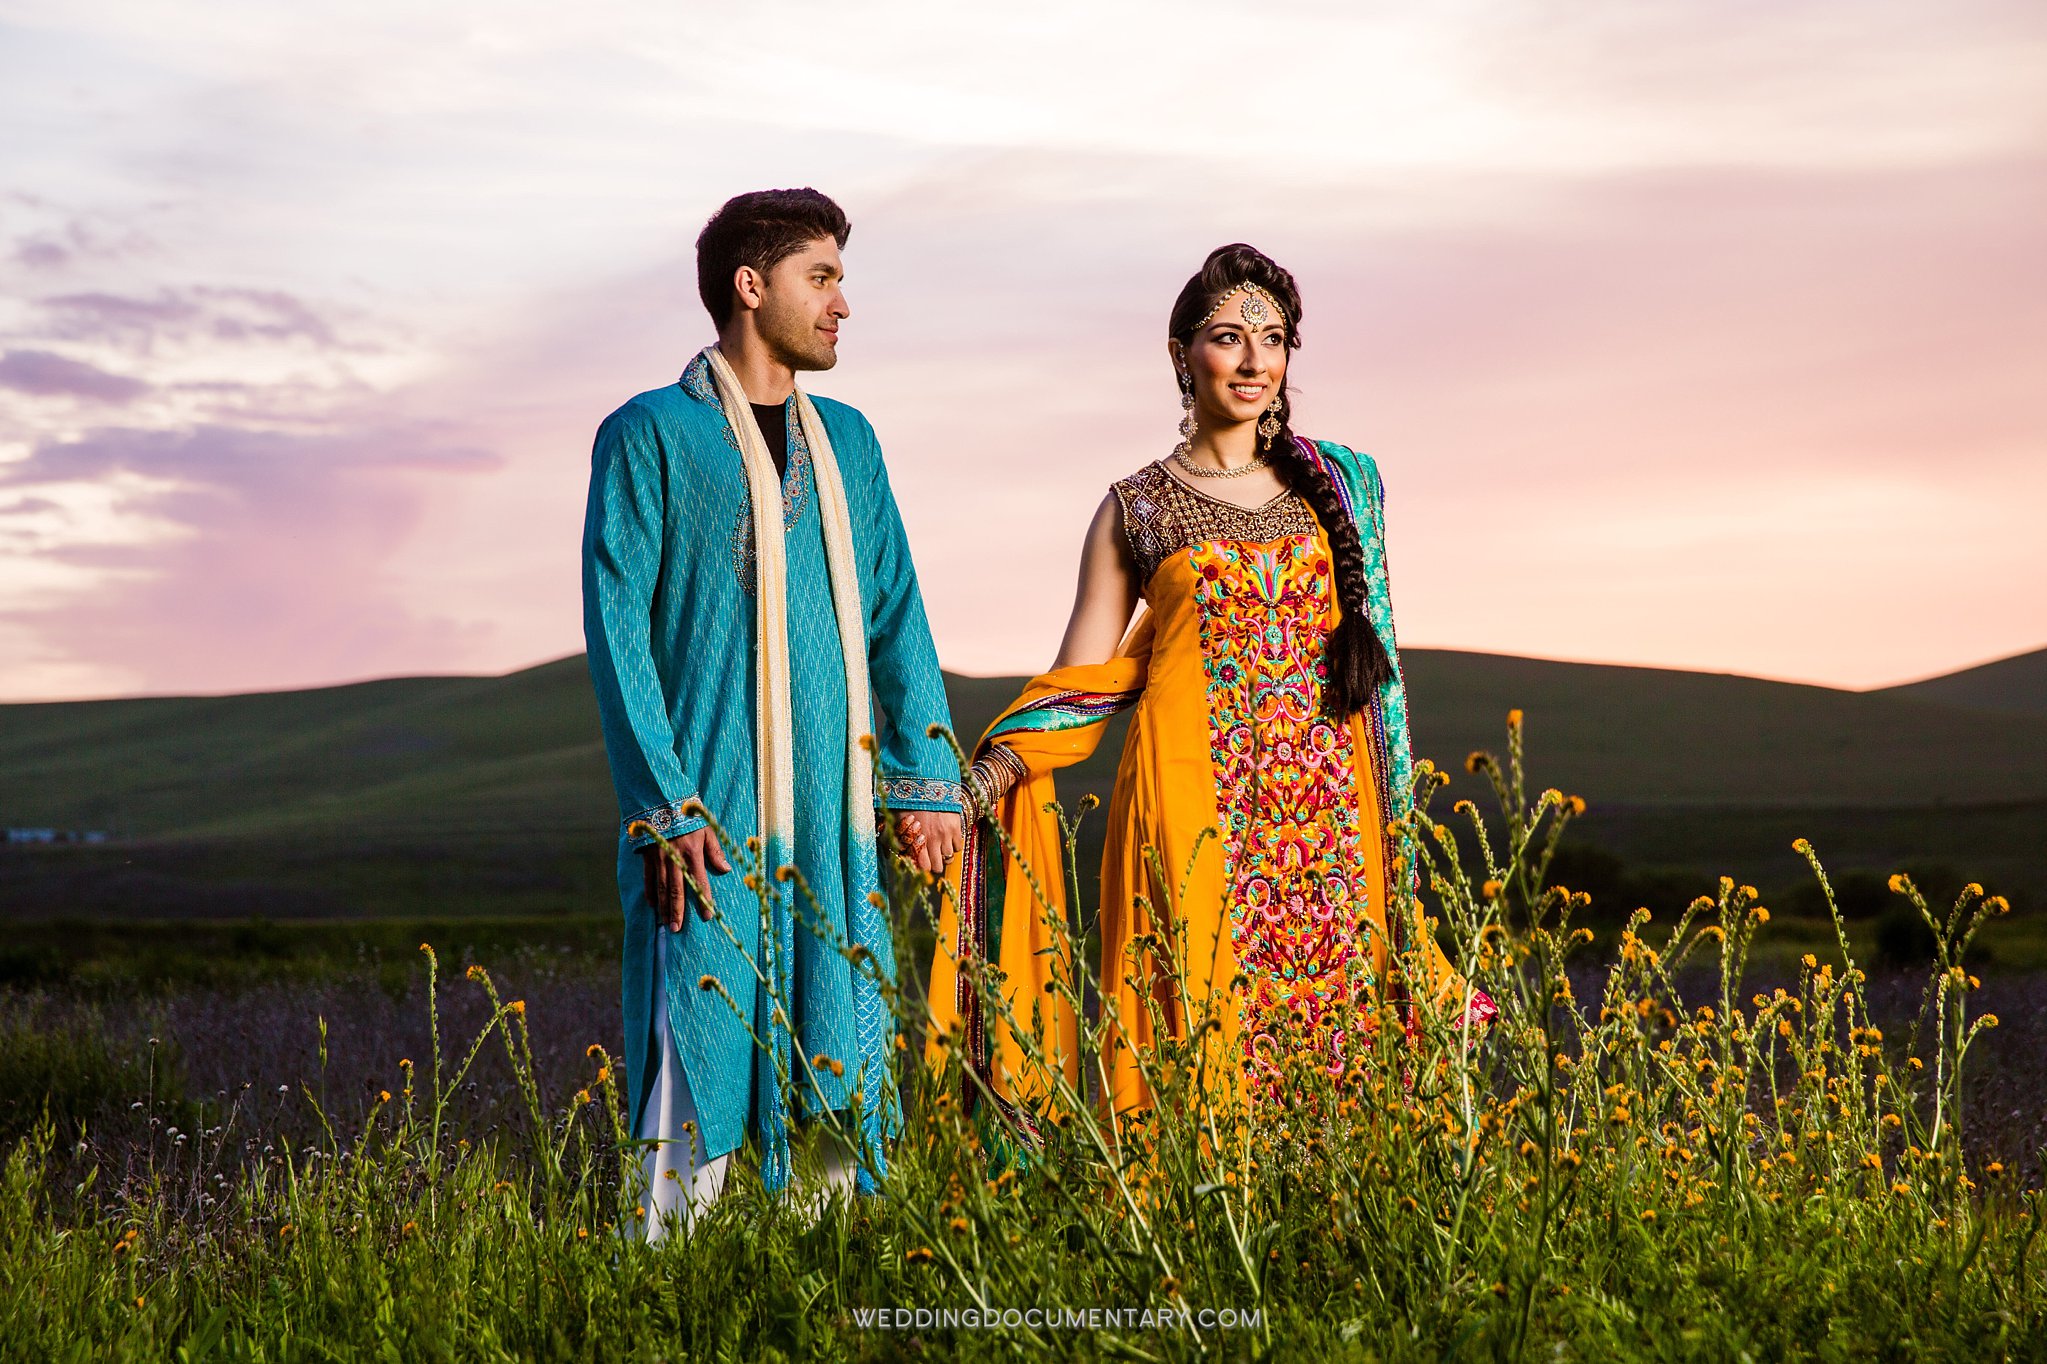 Pakistani wedding photo